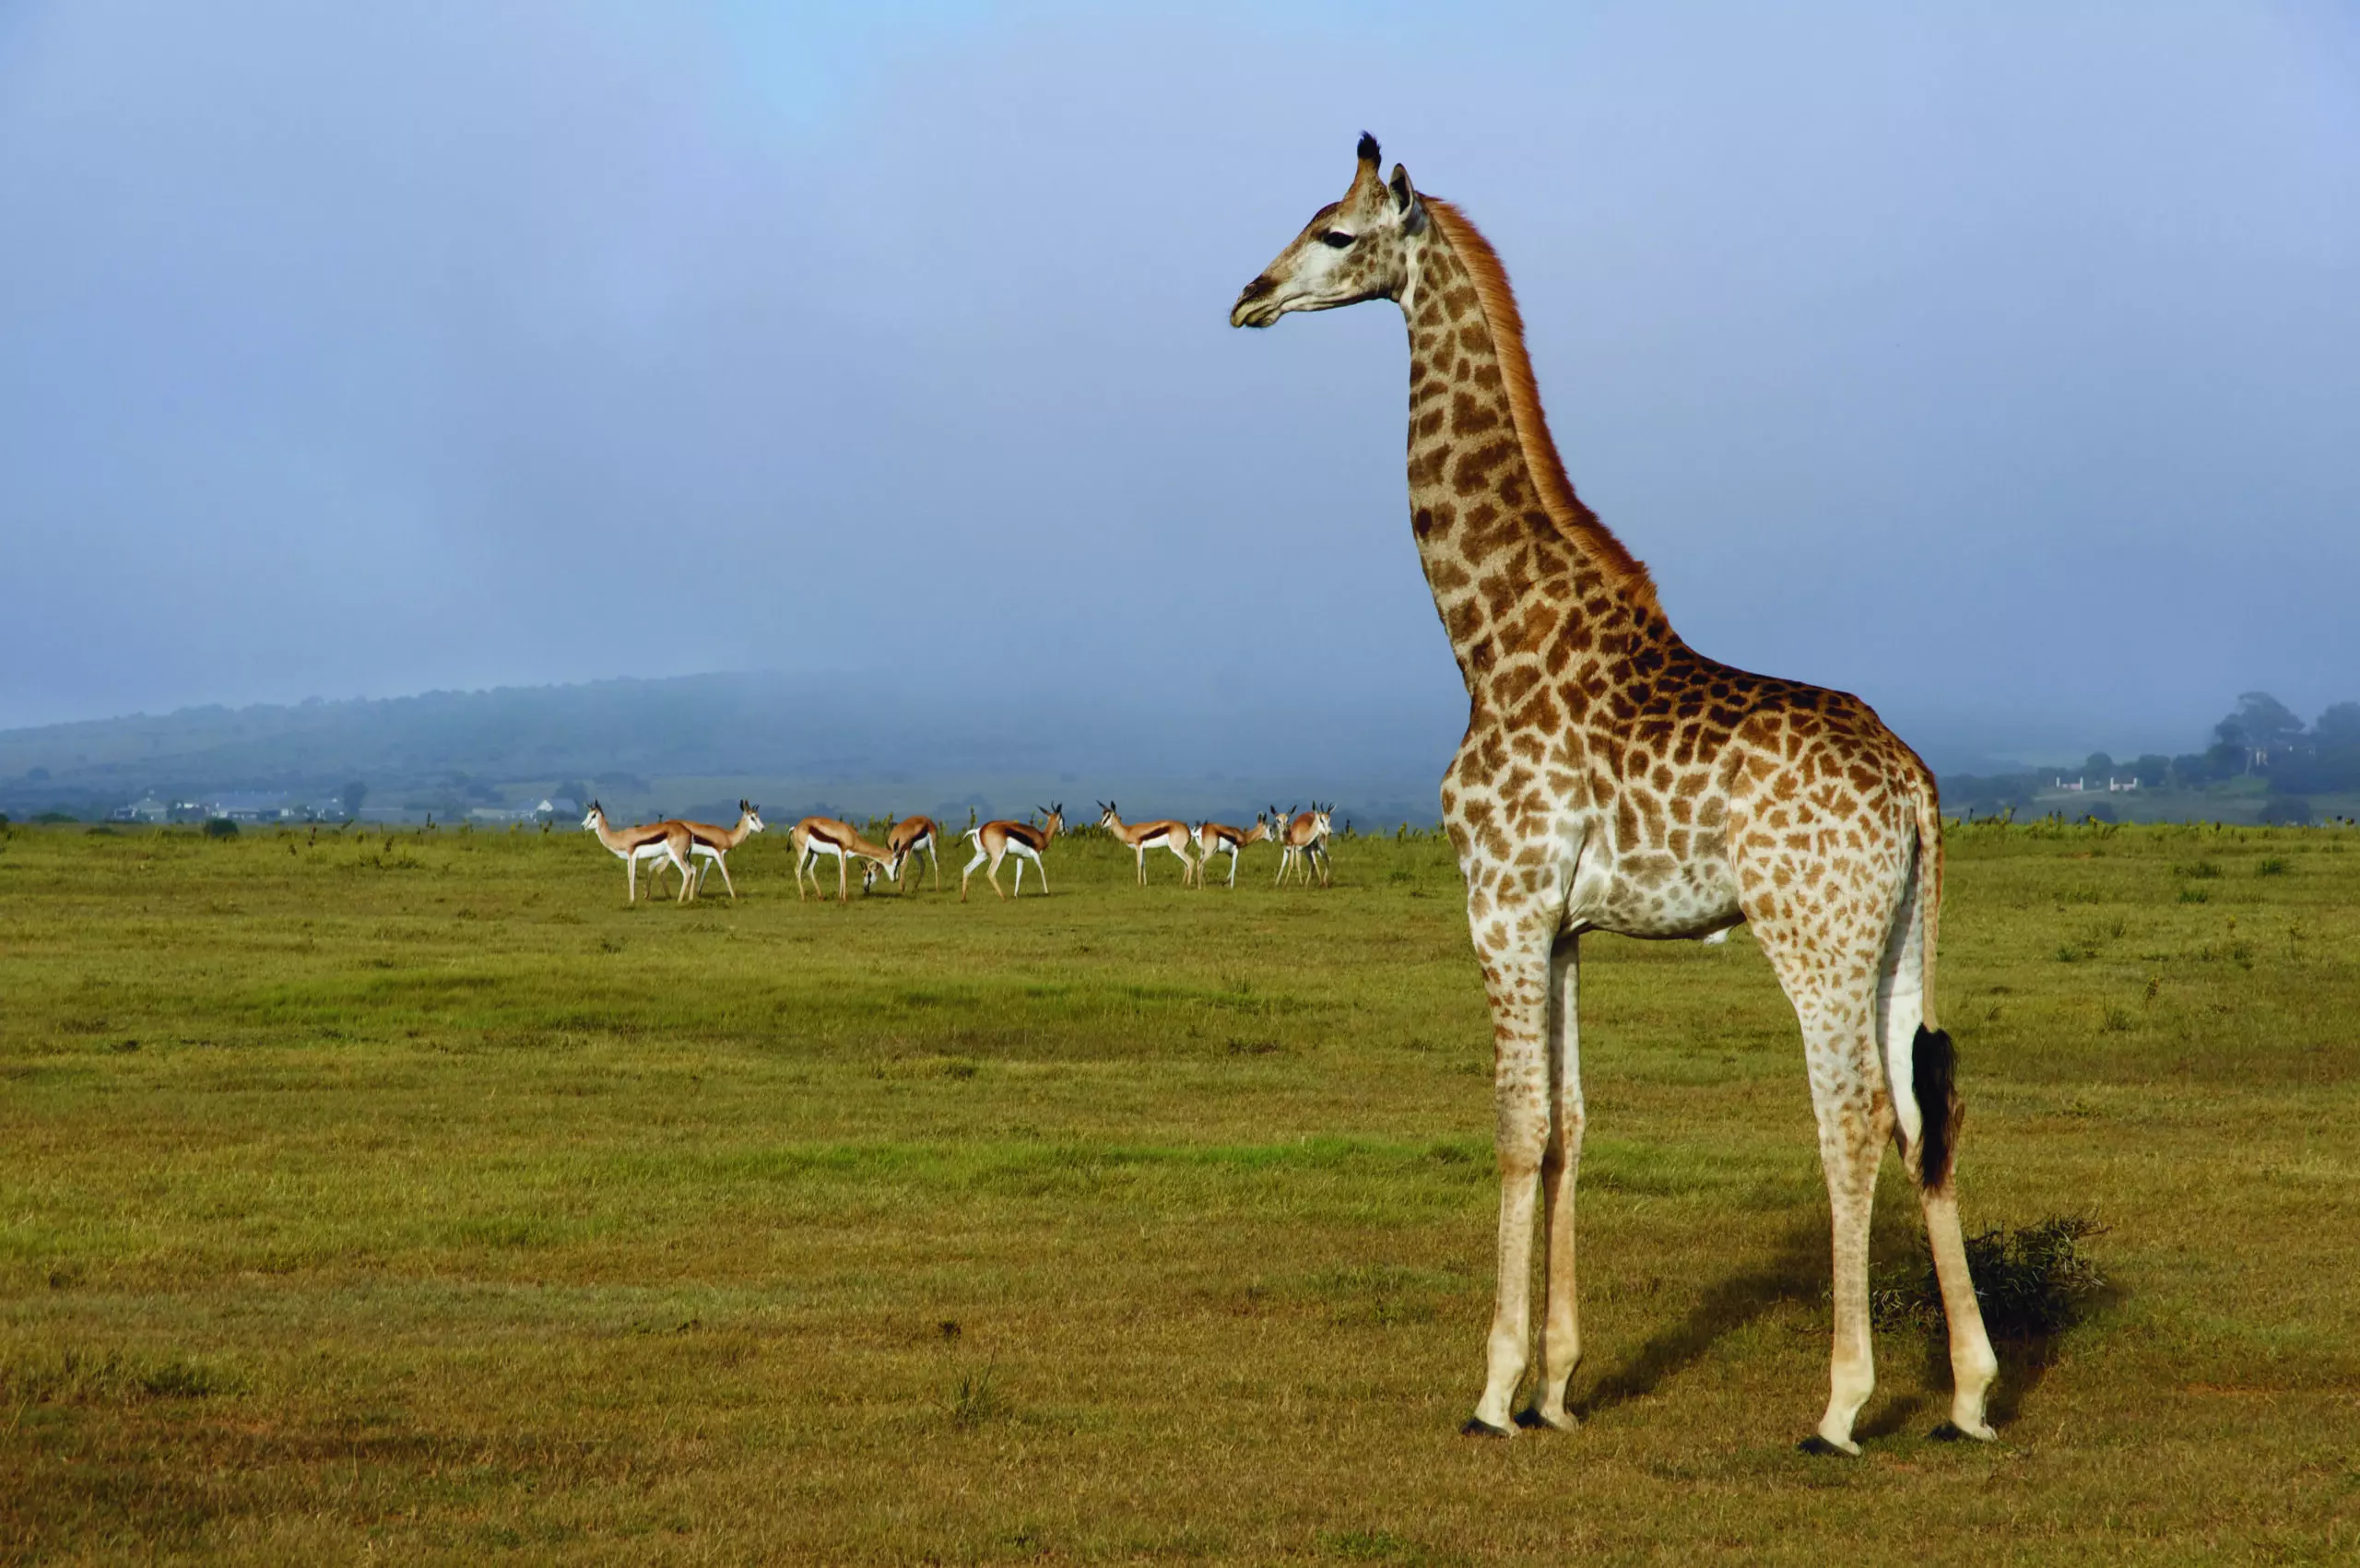 Wandbild (3460) Giraffen 3 präsentiert: Tiere,Wildtiere,Aus Afrika